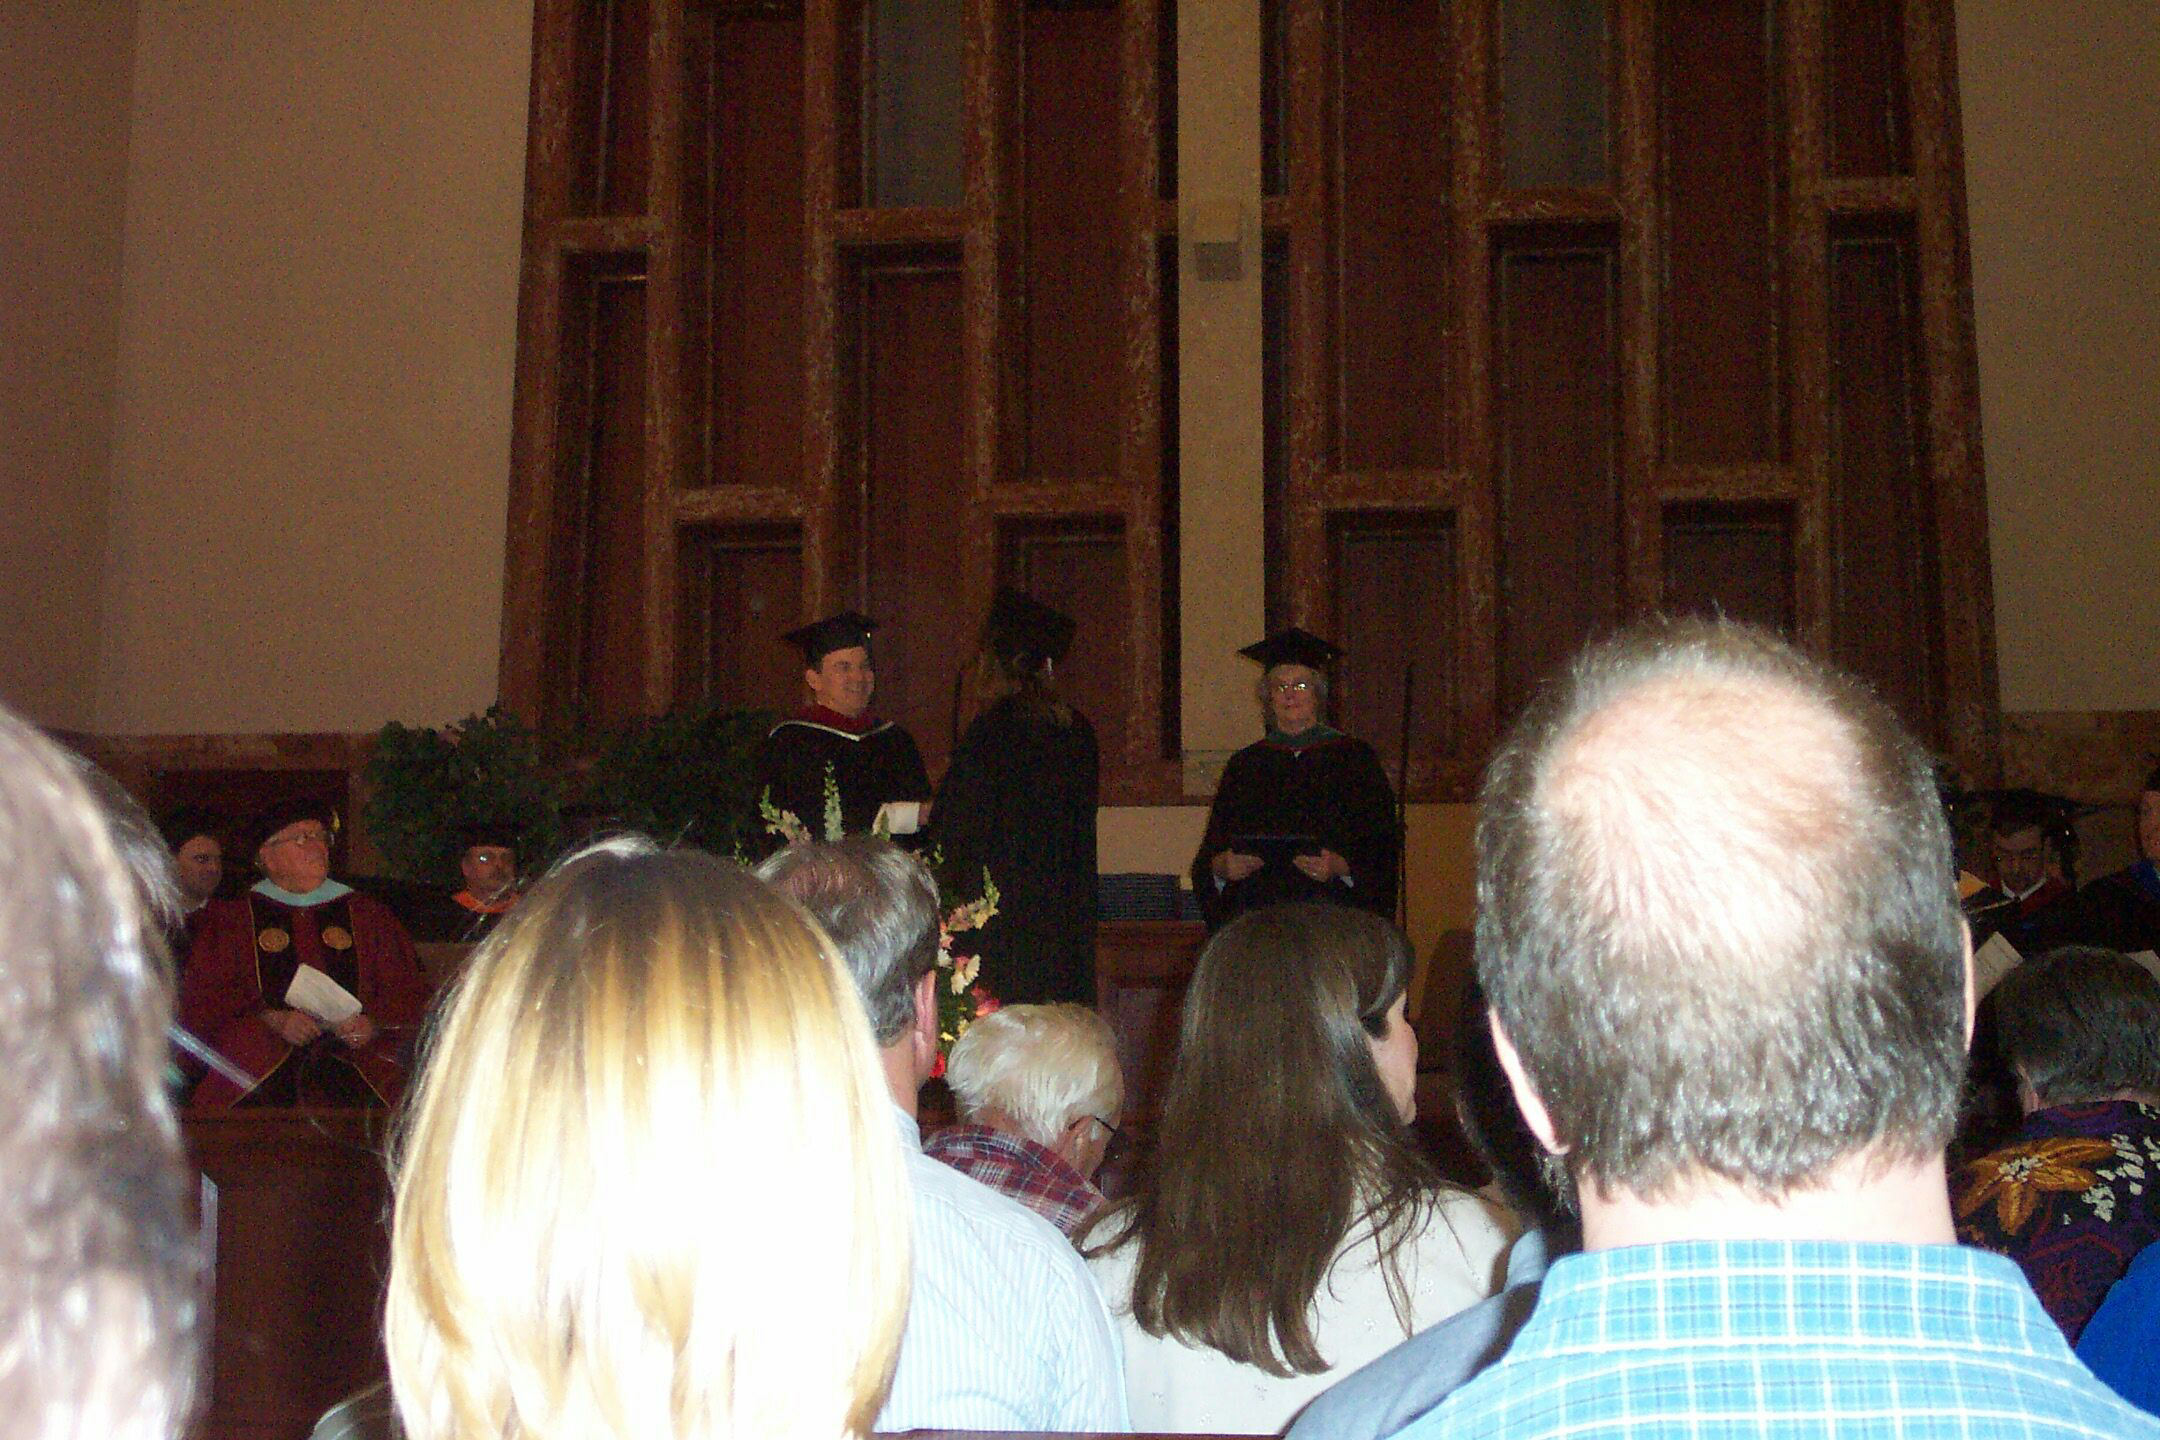 Receiving her diploma